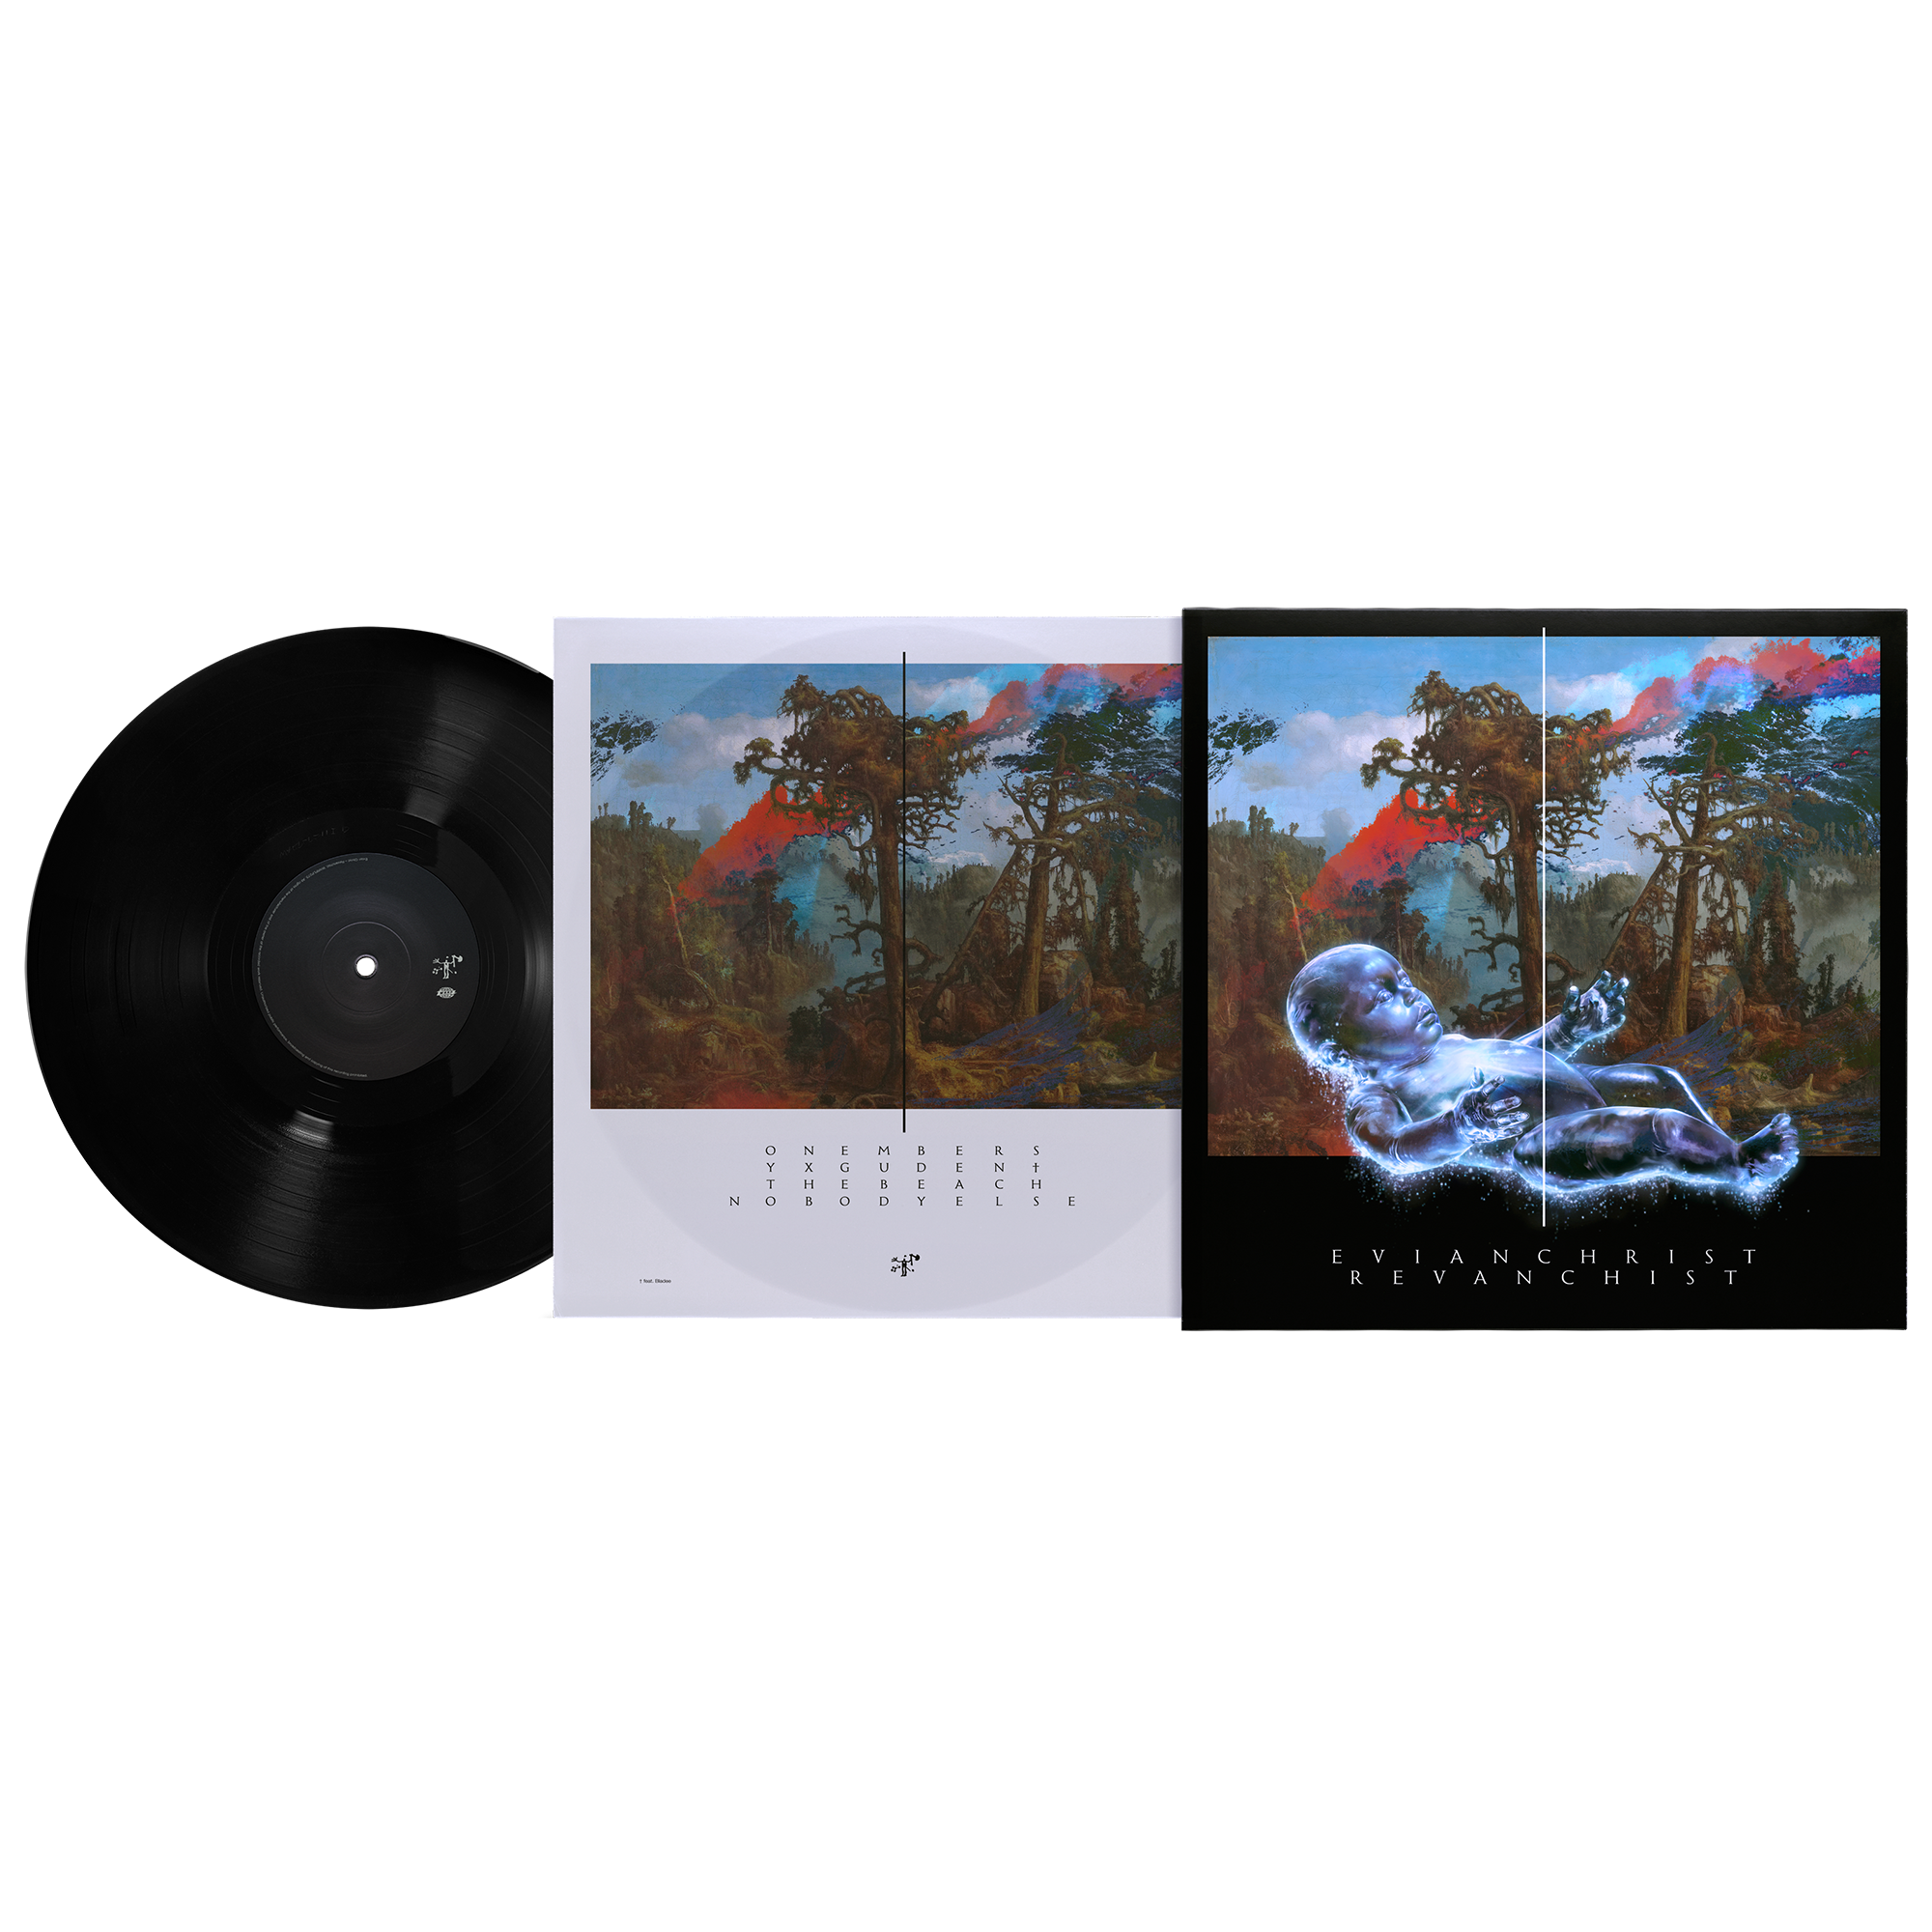 Evian Christ - Revanchist: Vinyl LP